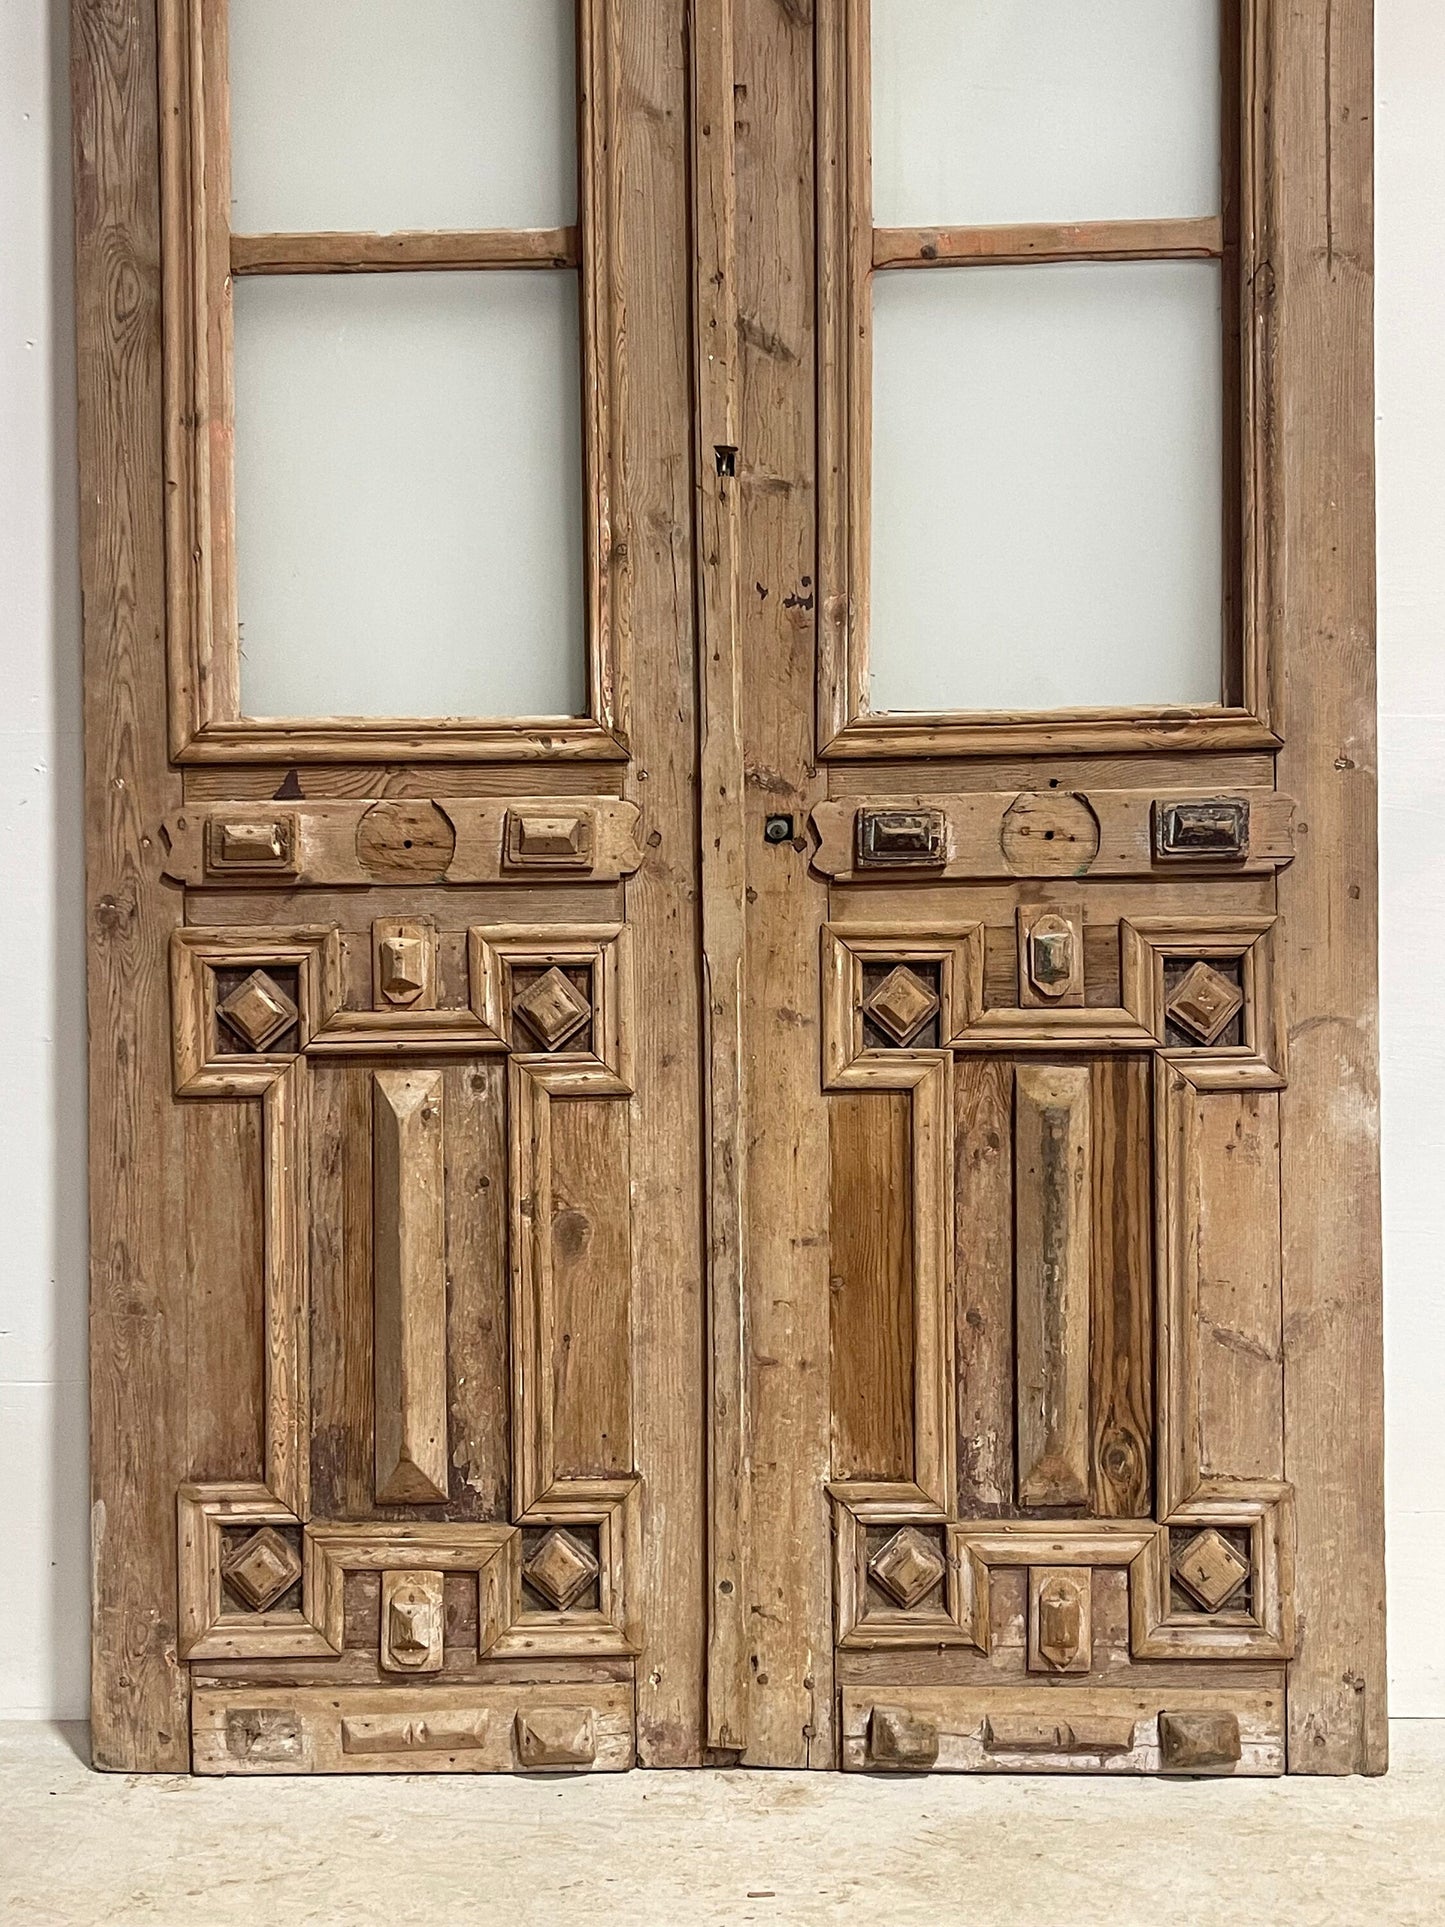 Antique French panel doors (99.5x59) H0026s